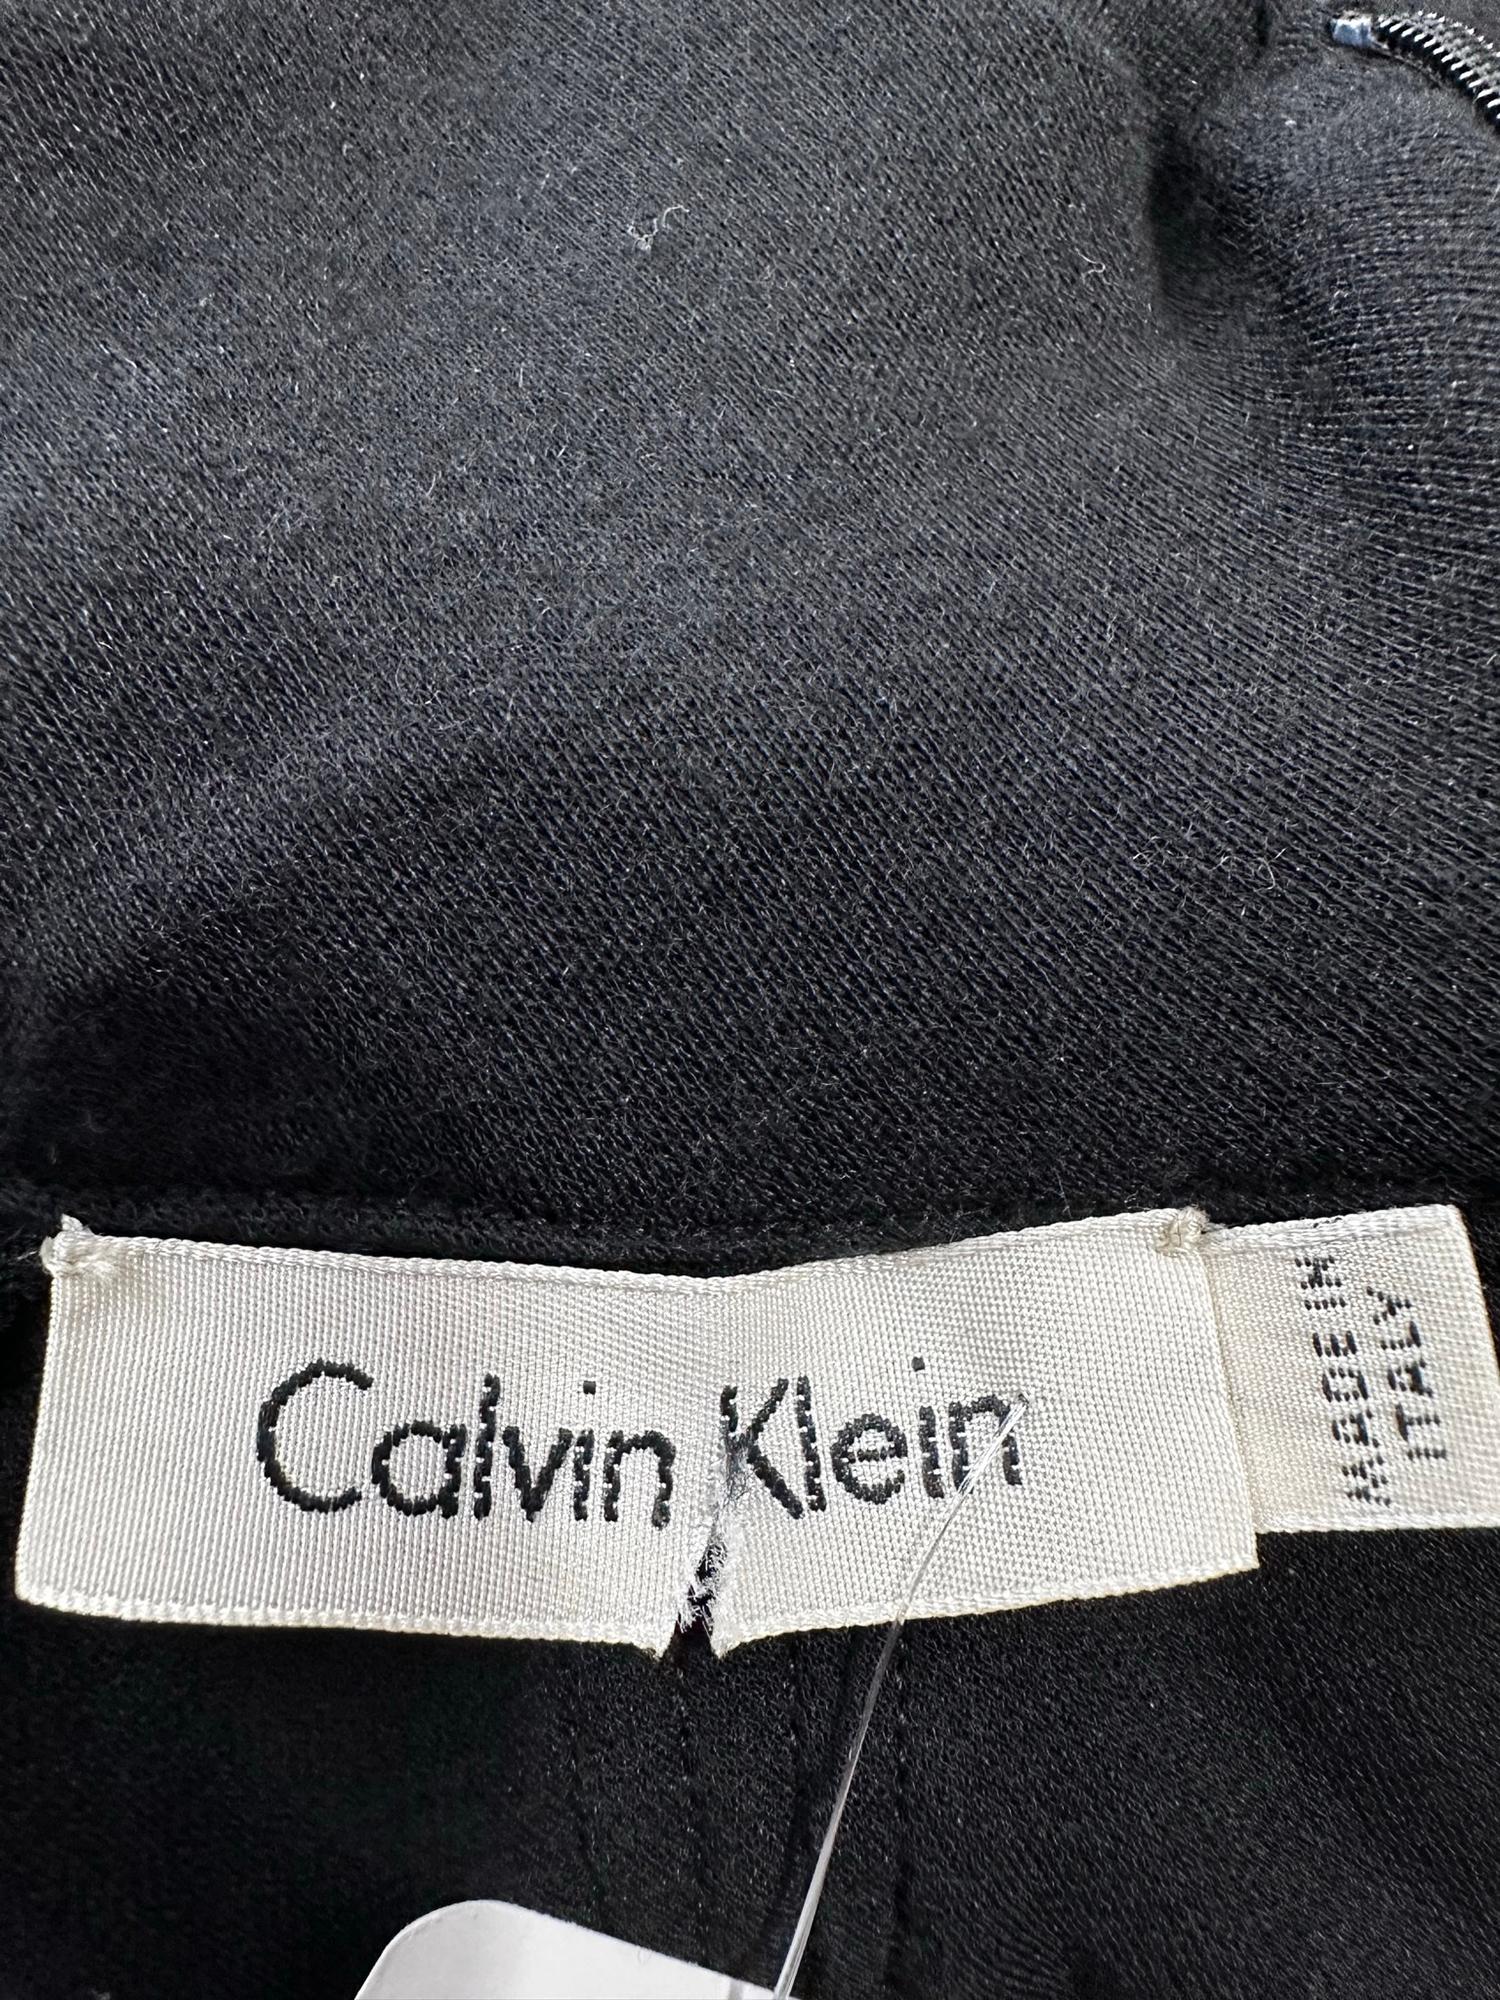 Calvin Klein 1990s Cashmere Blend Bias sheer Seam Classic Fit & Flair Dress 8 For Sale 9